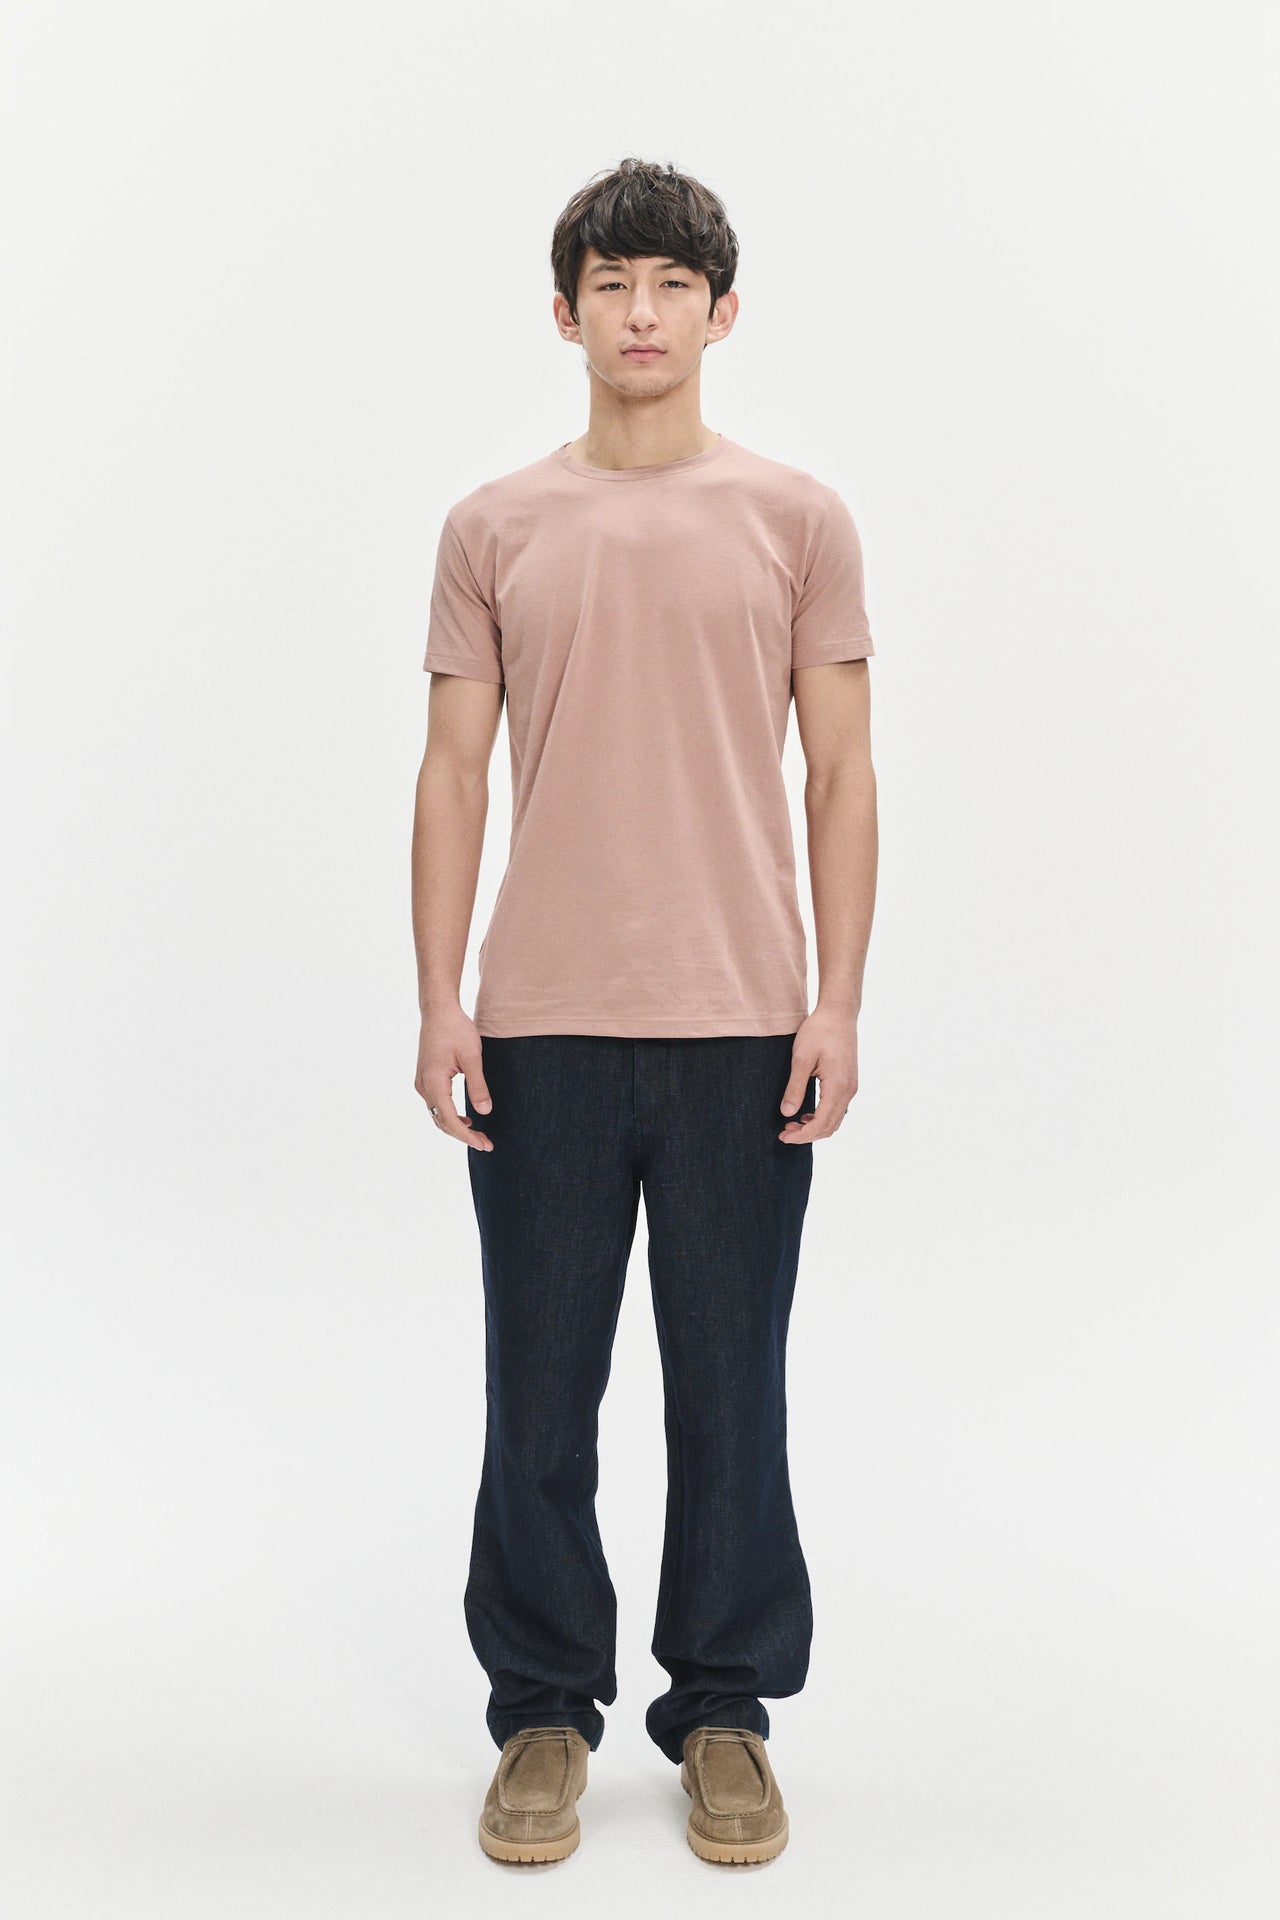 Pocket T-Shirt in a Powder Pink Soft Organic Japanese Cotton